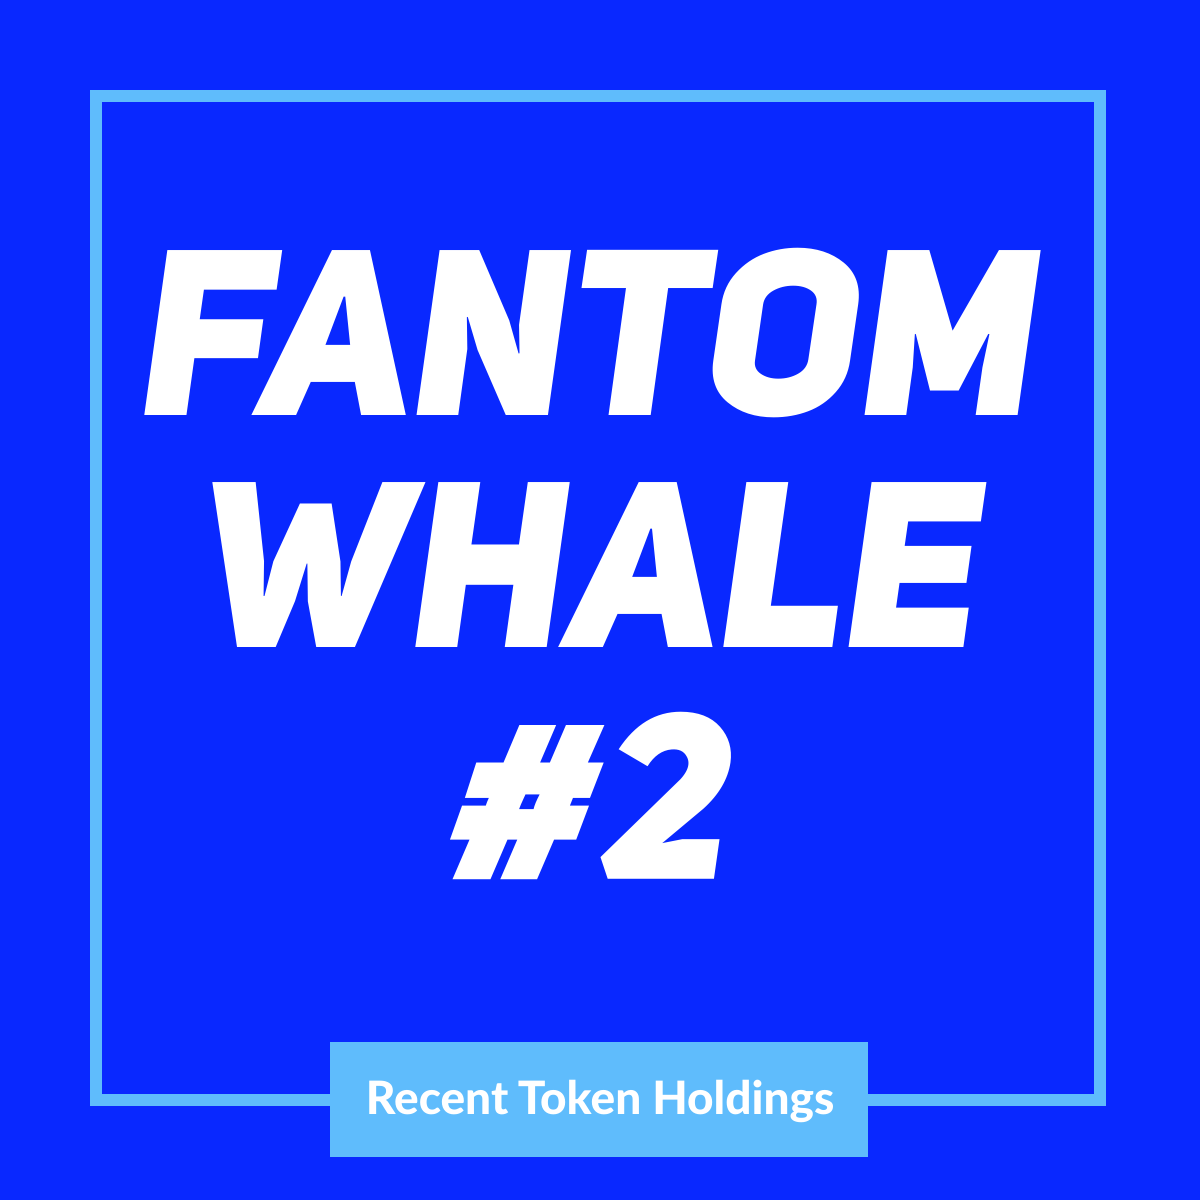 Fantom Whale #2